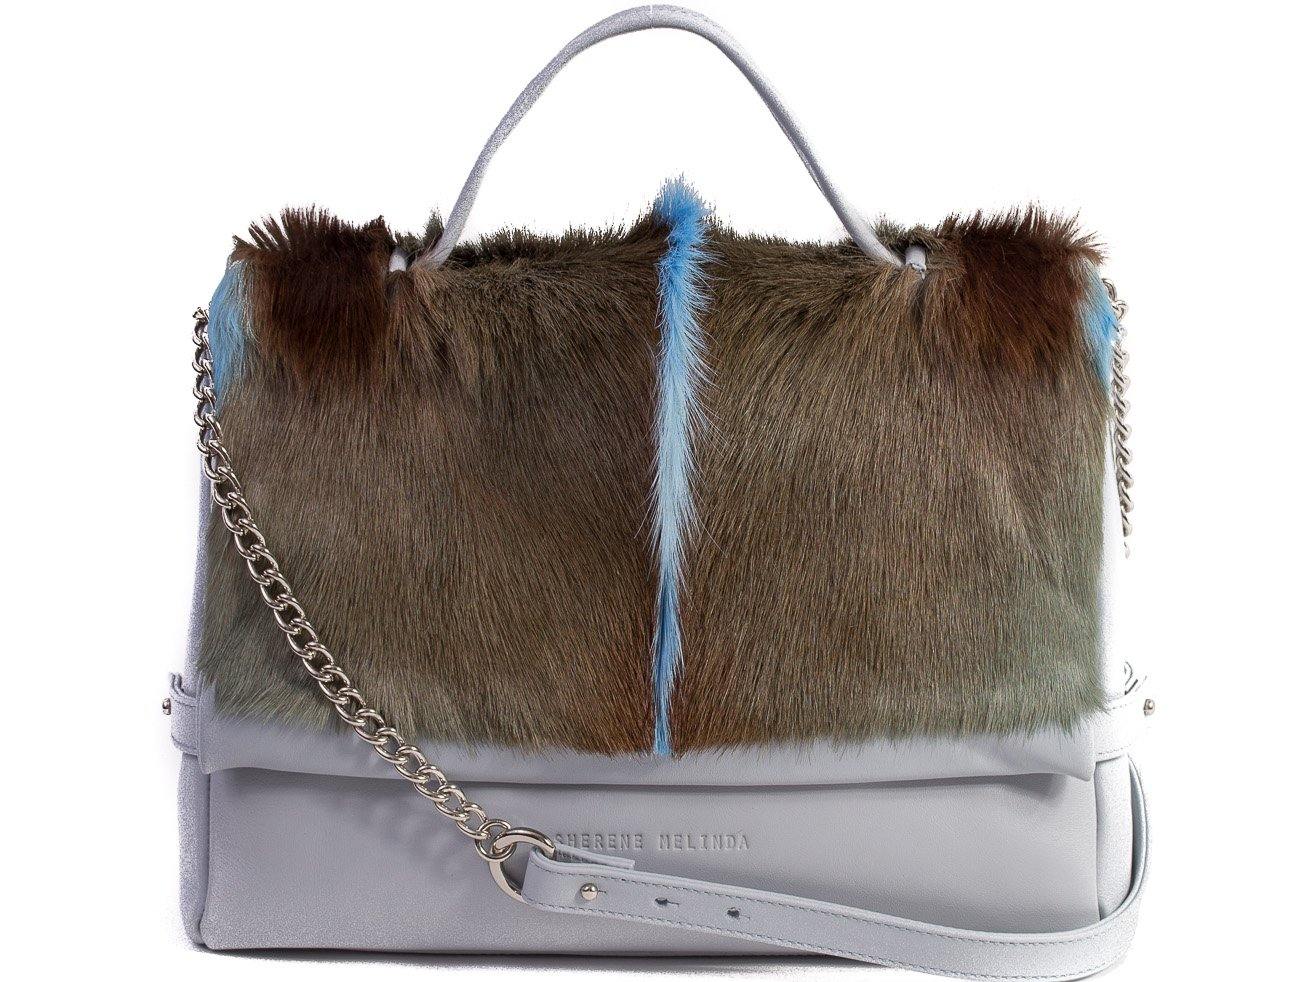 sherene melinda springbok hair-on-hide baby blue leather smith tote bag fan front strap